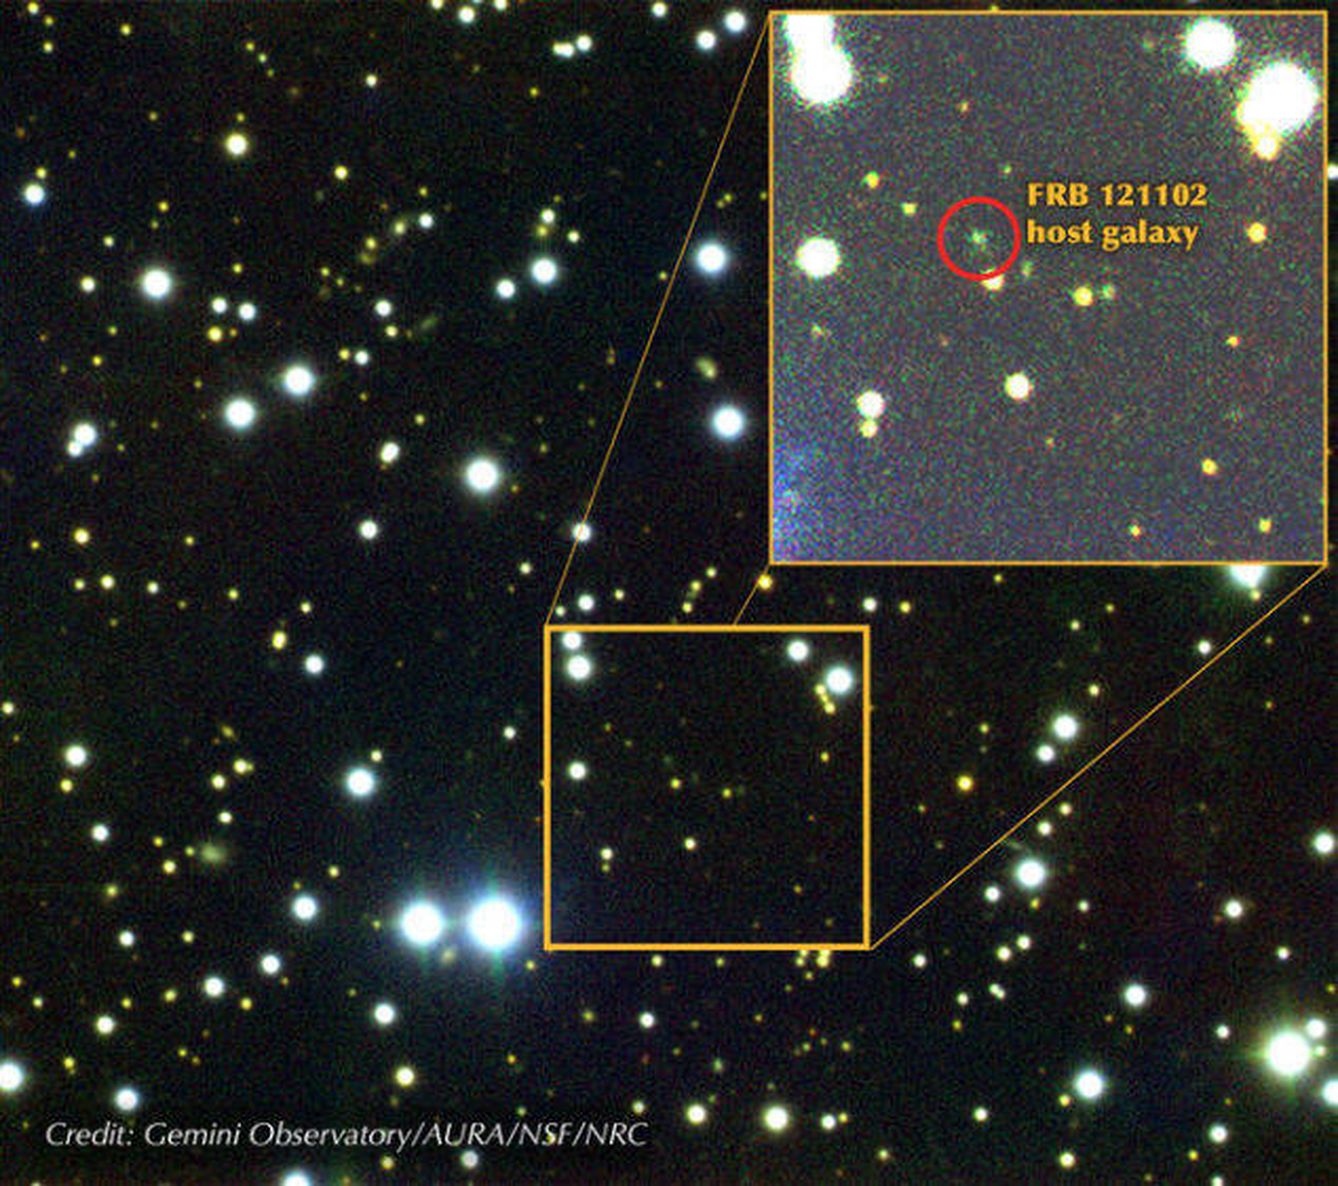 La galaxia que ha dado origen al FRB 121102